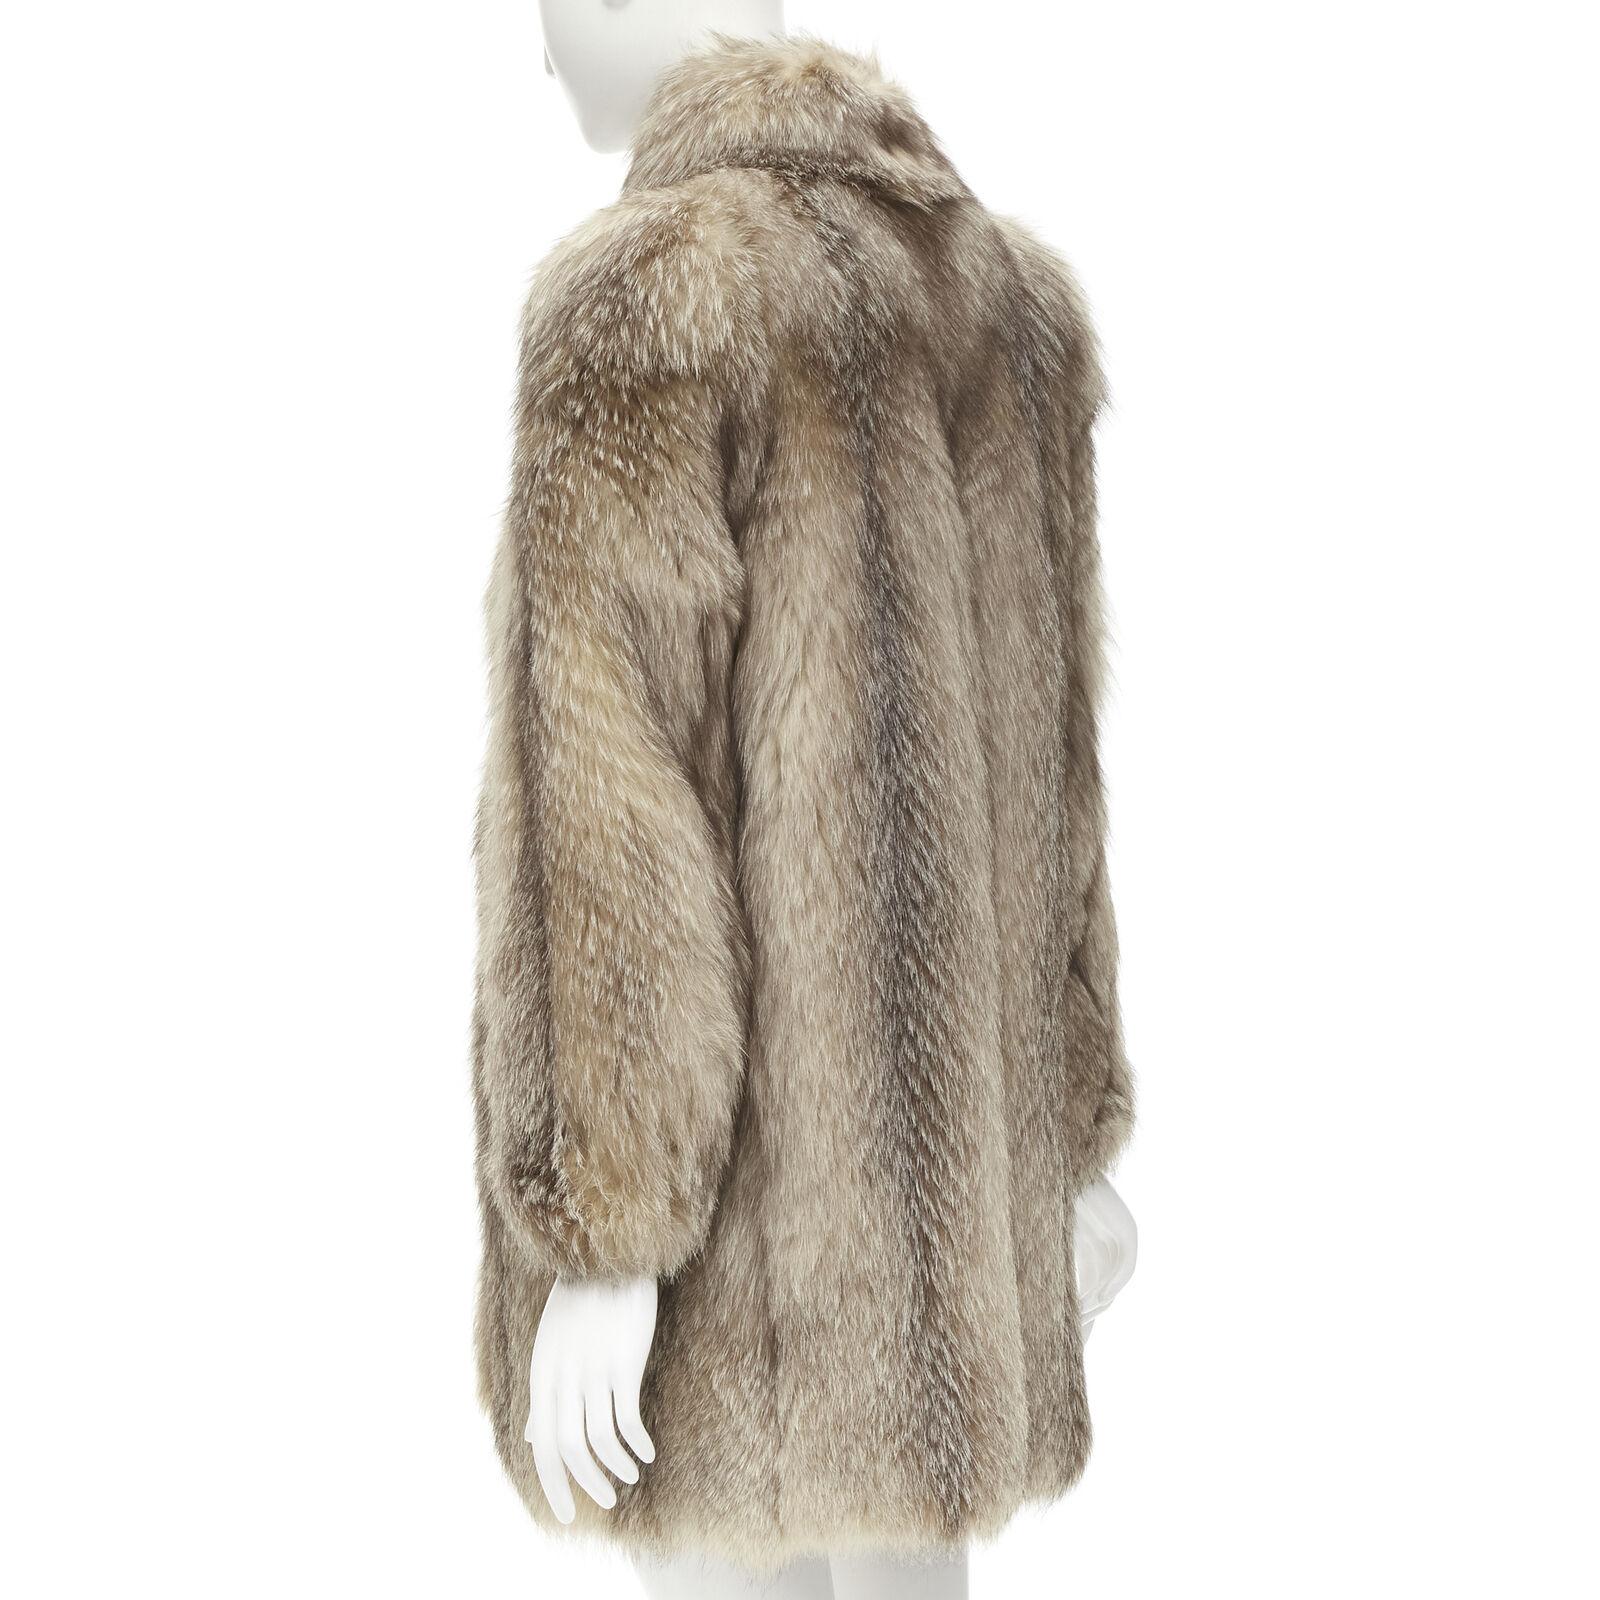 CORNELIUS brown fur shawl collar long sleeve hook eye fur jacket For Sale 2